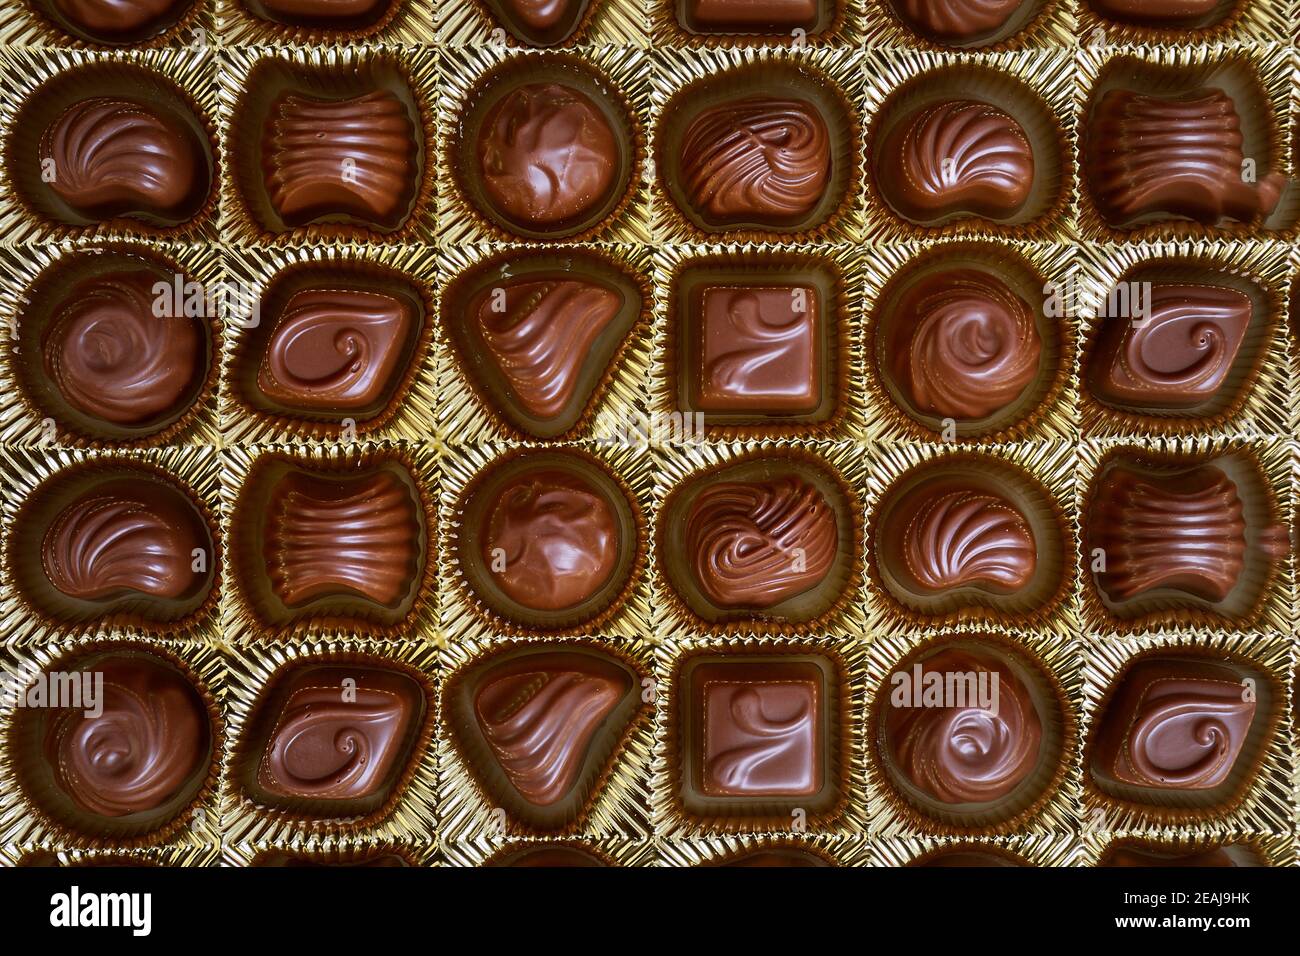 Chocolat : Treets & Friends